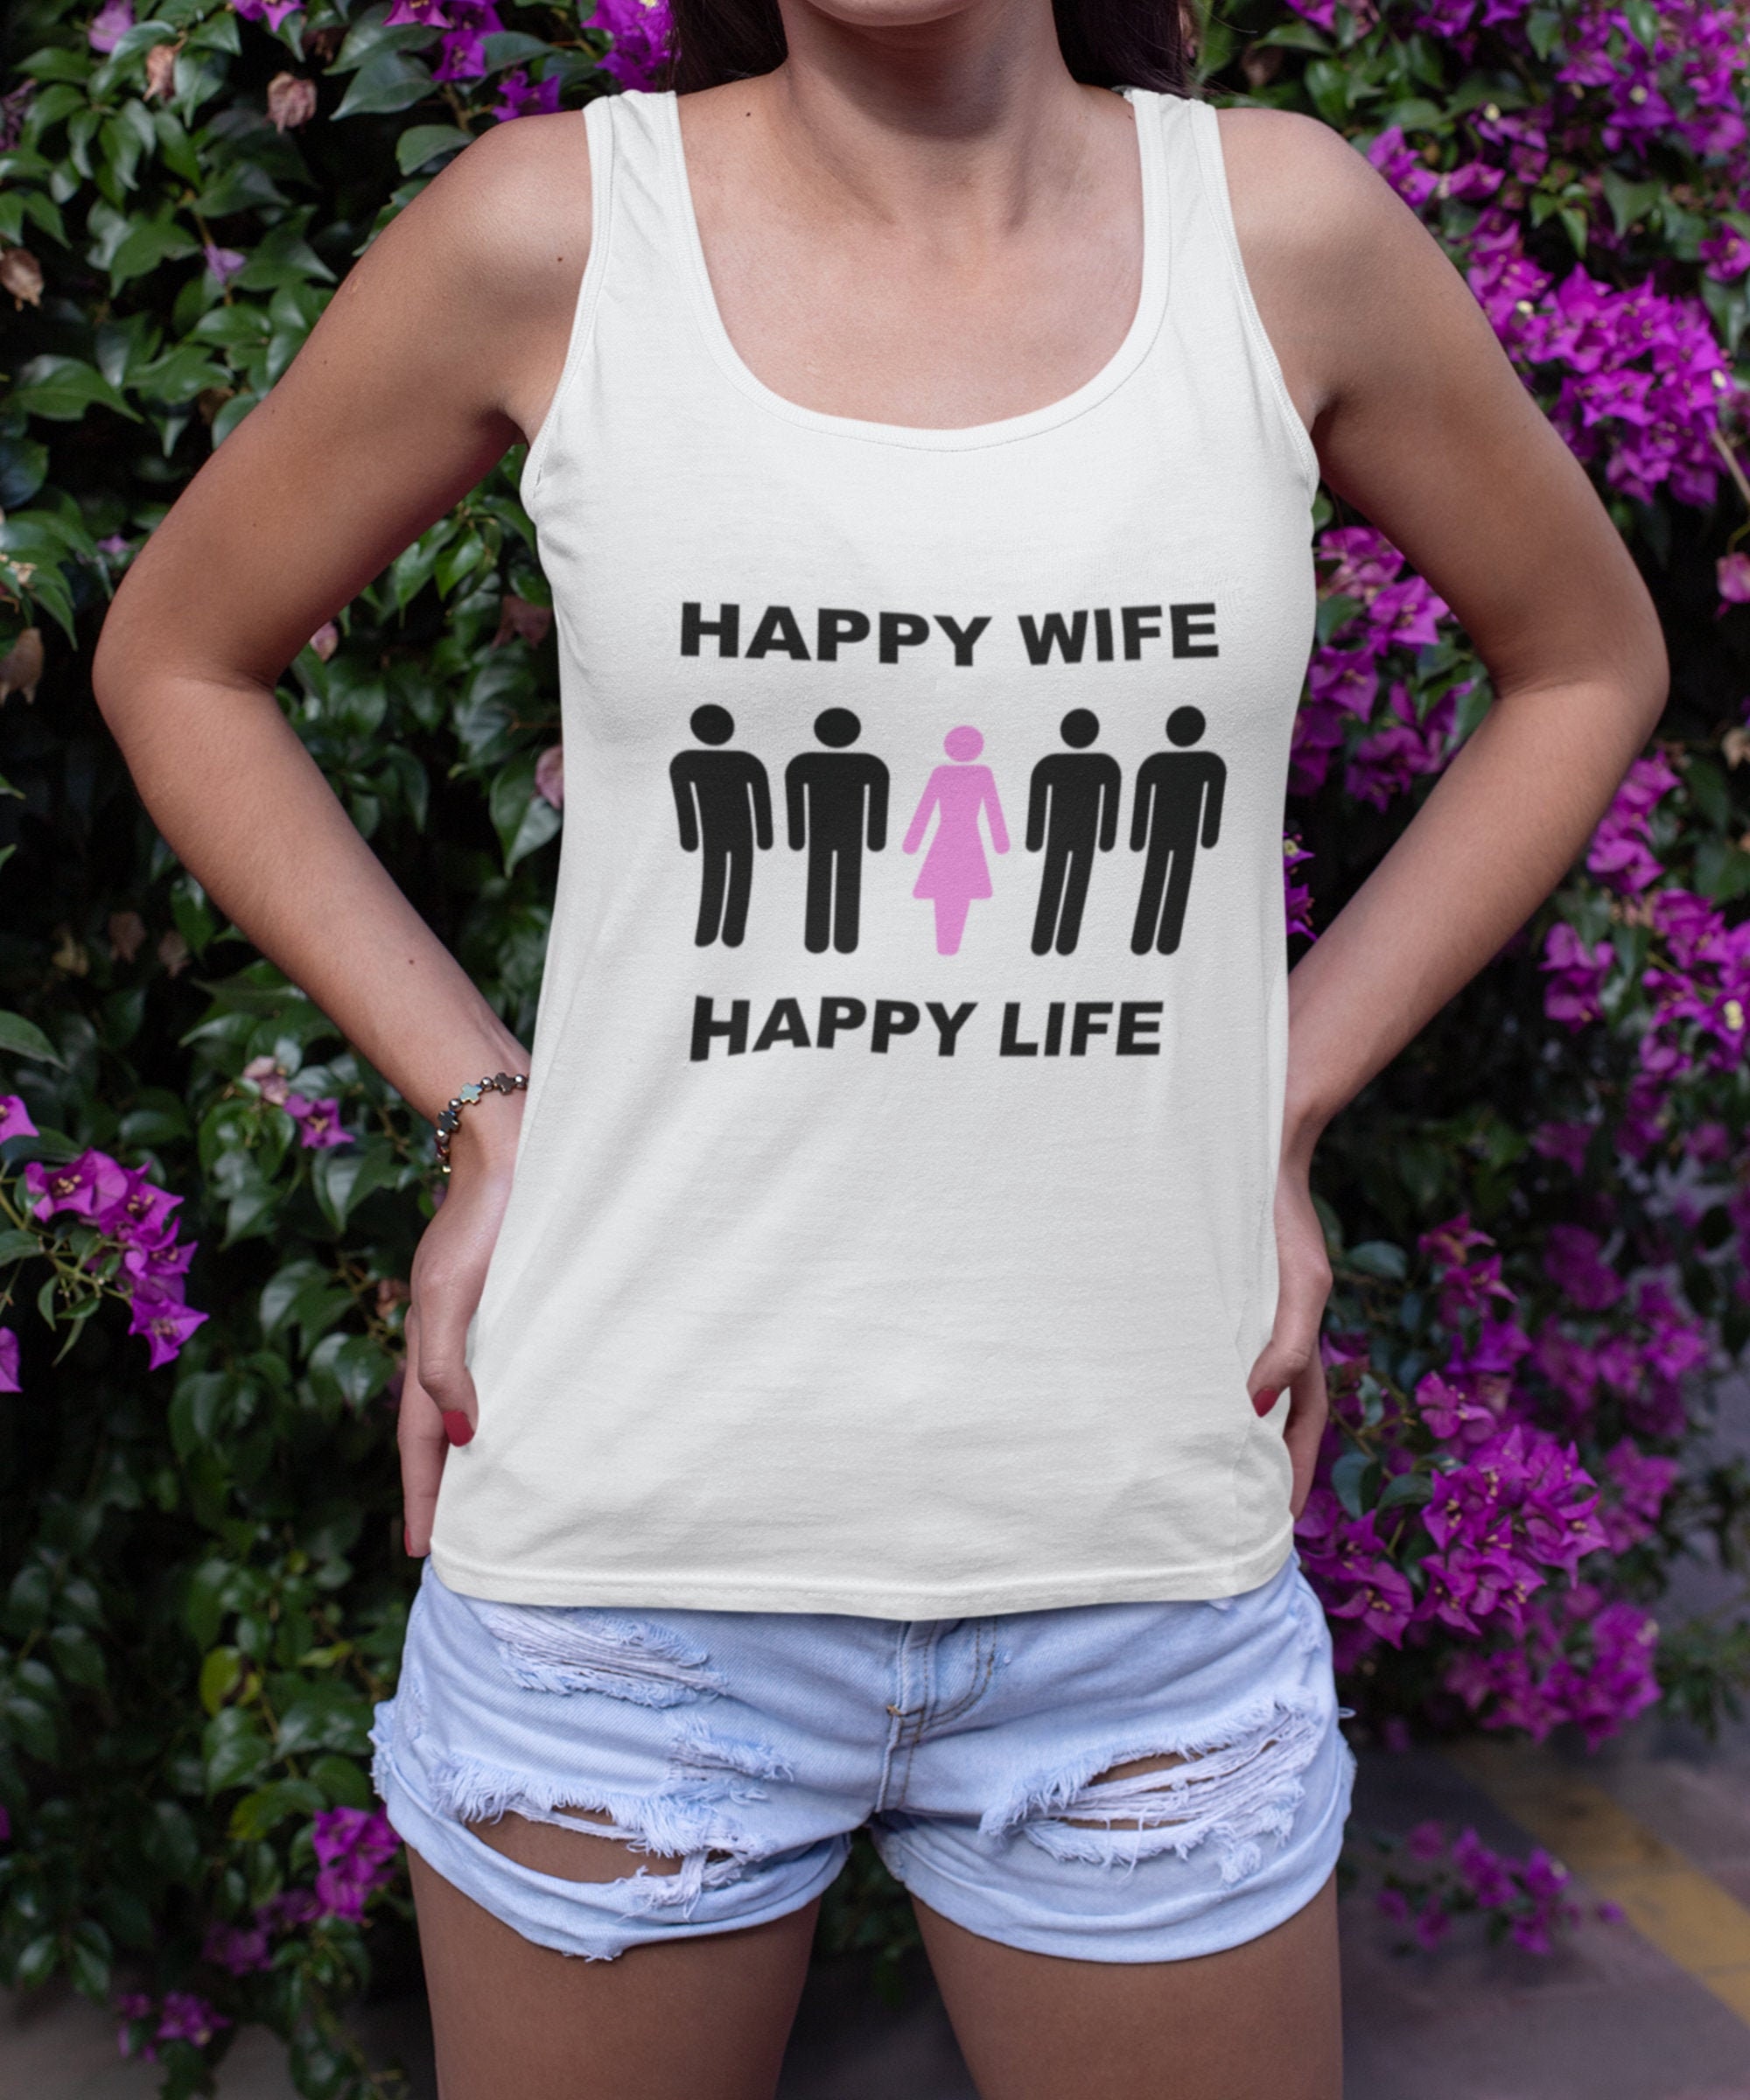 Hotwife Clothing Gangbang Shirt Tank Top Happy Wife Happy Etsy